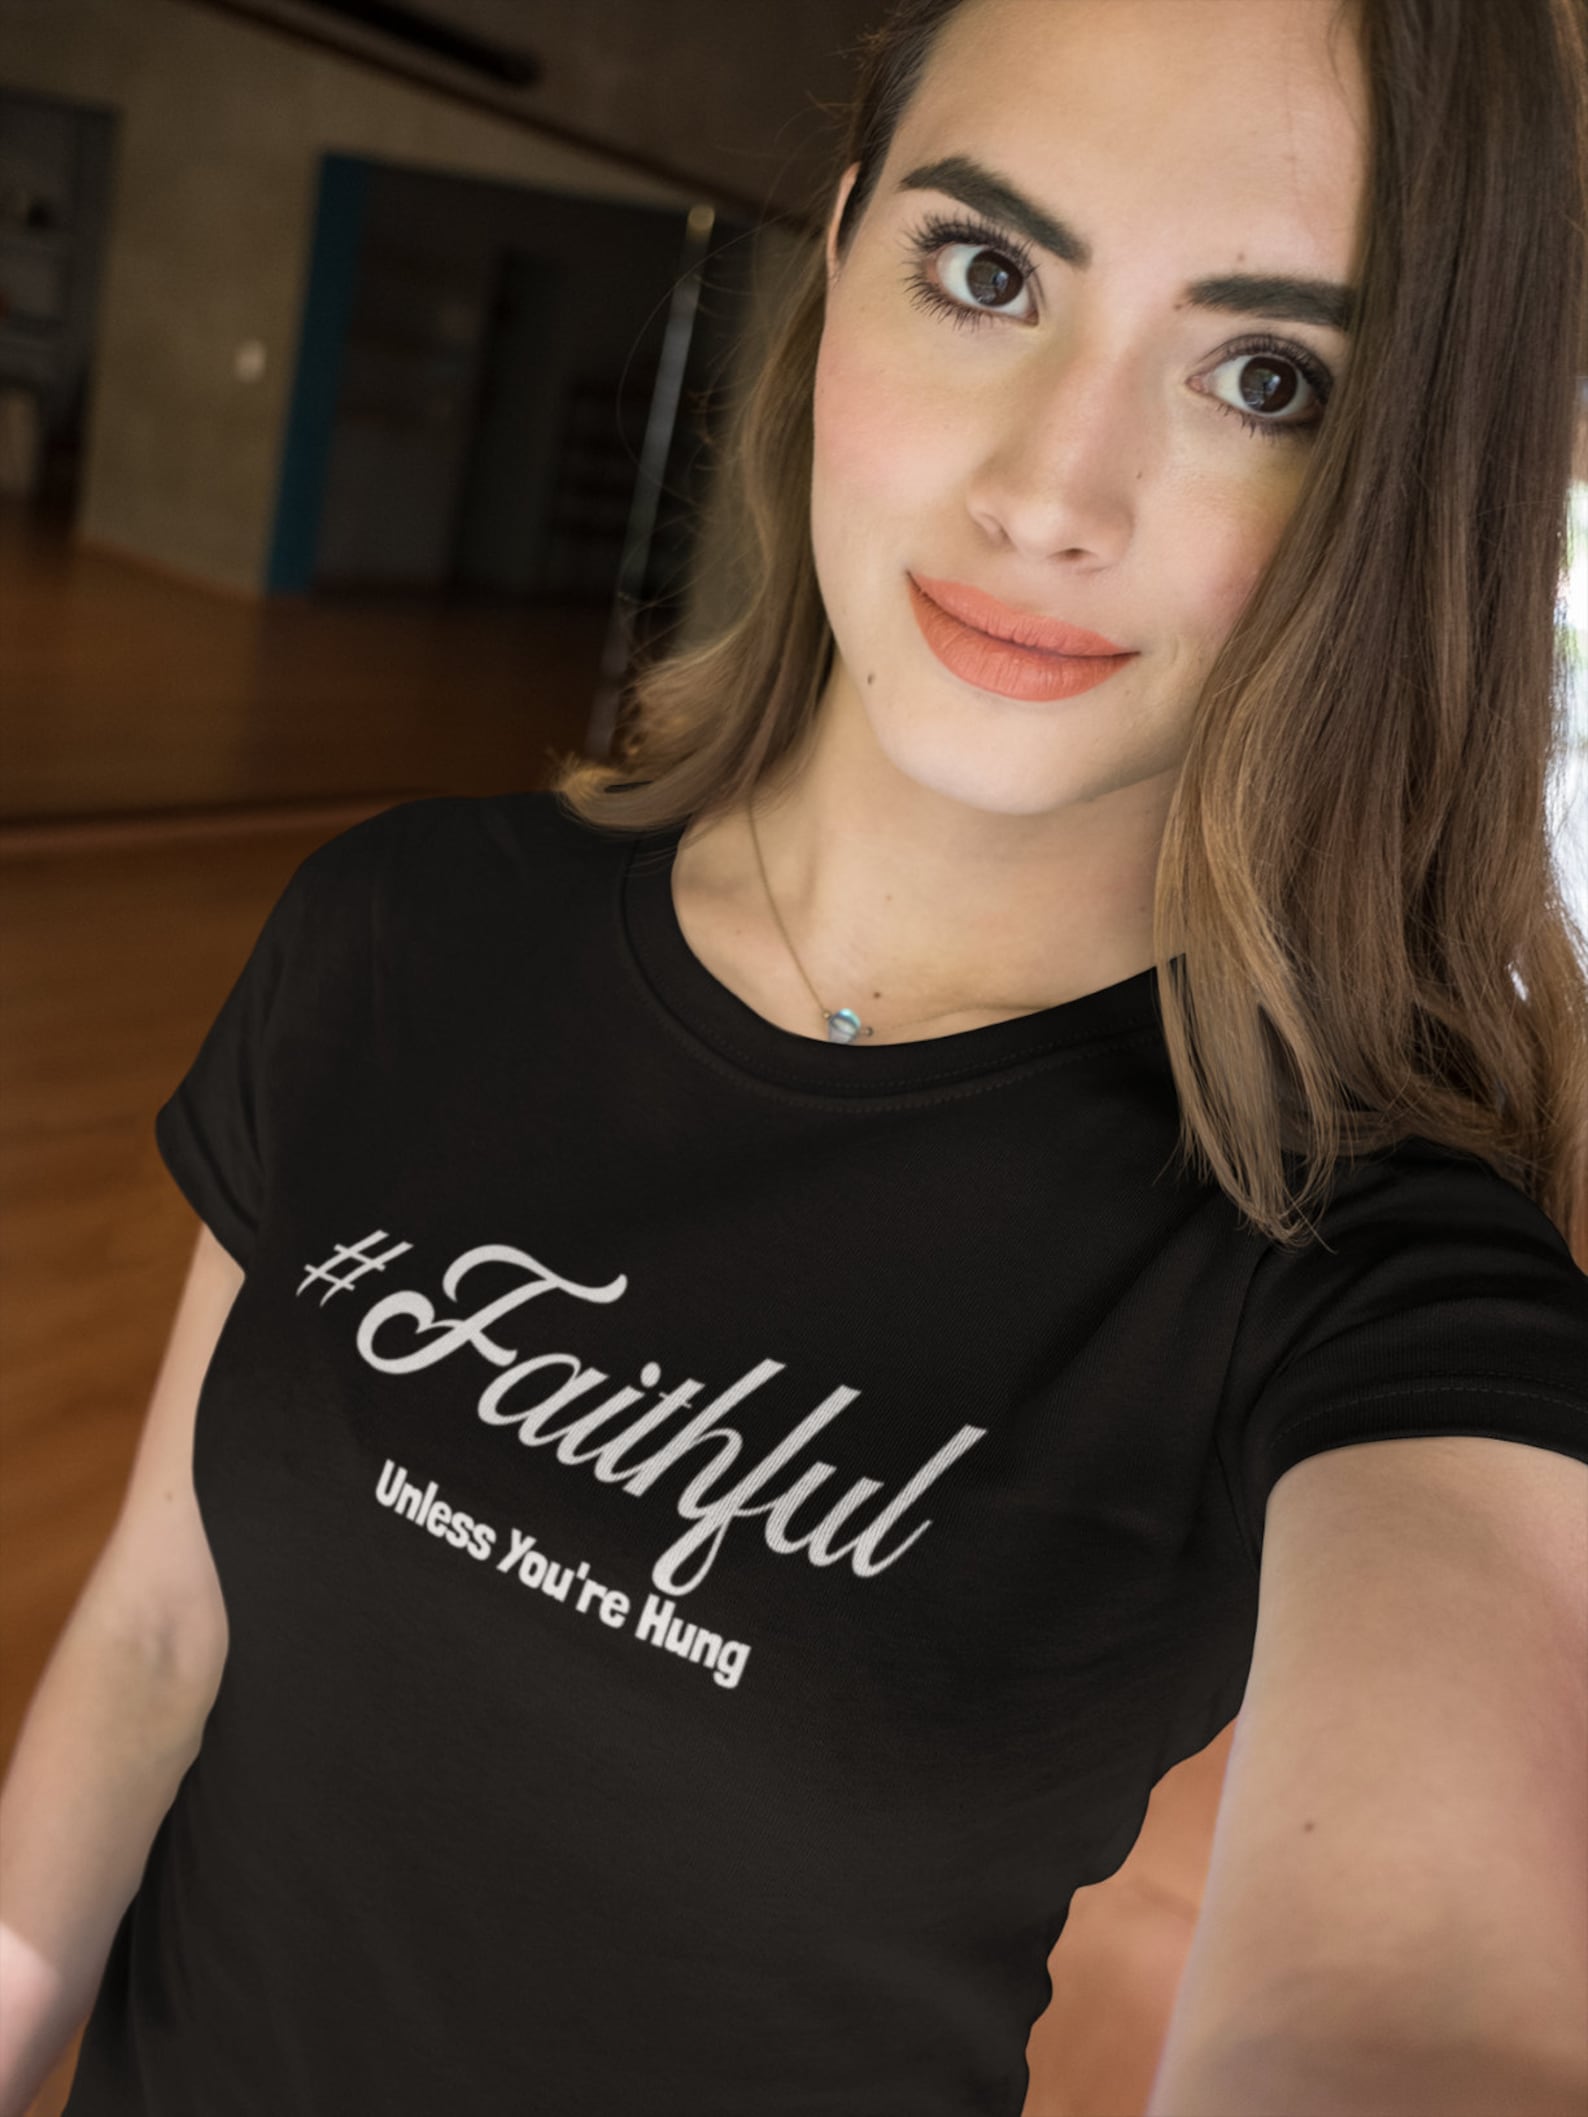 Hotwife Faithful Shirt Slut Shirt Stag And Vi